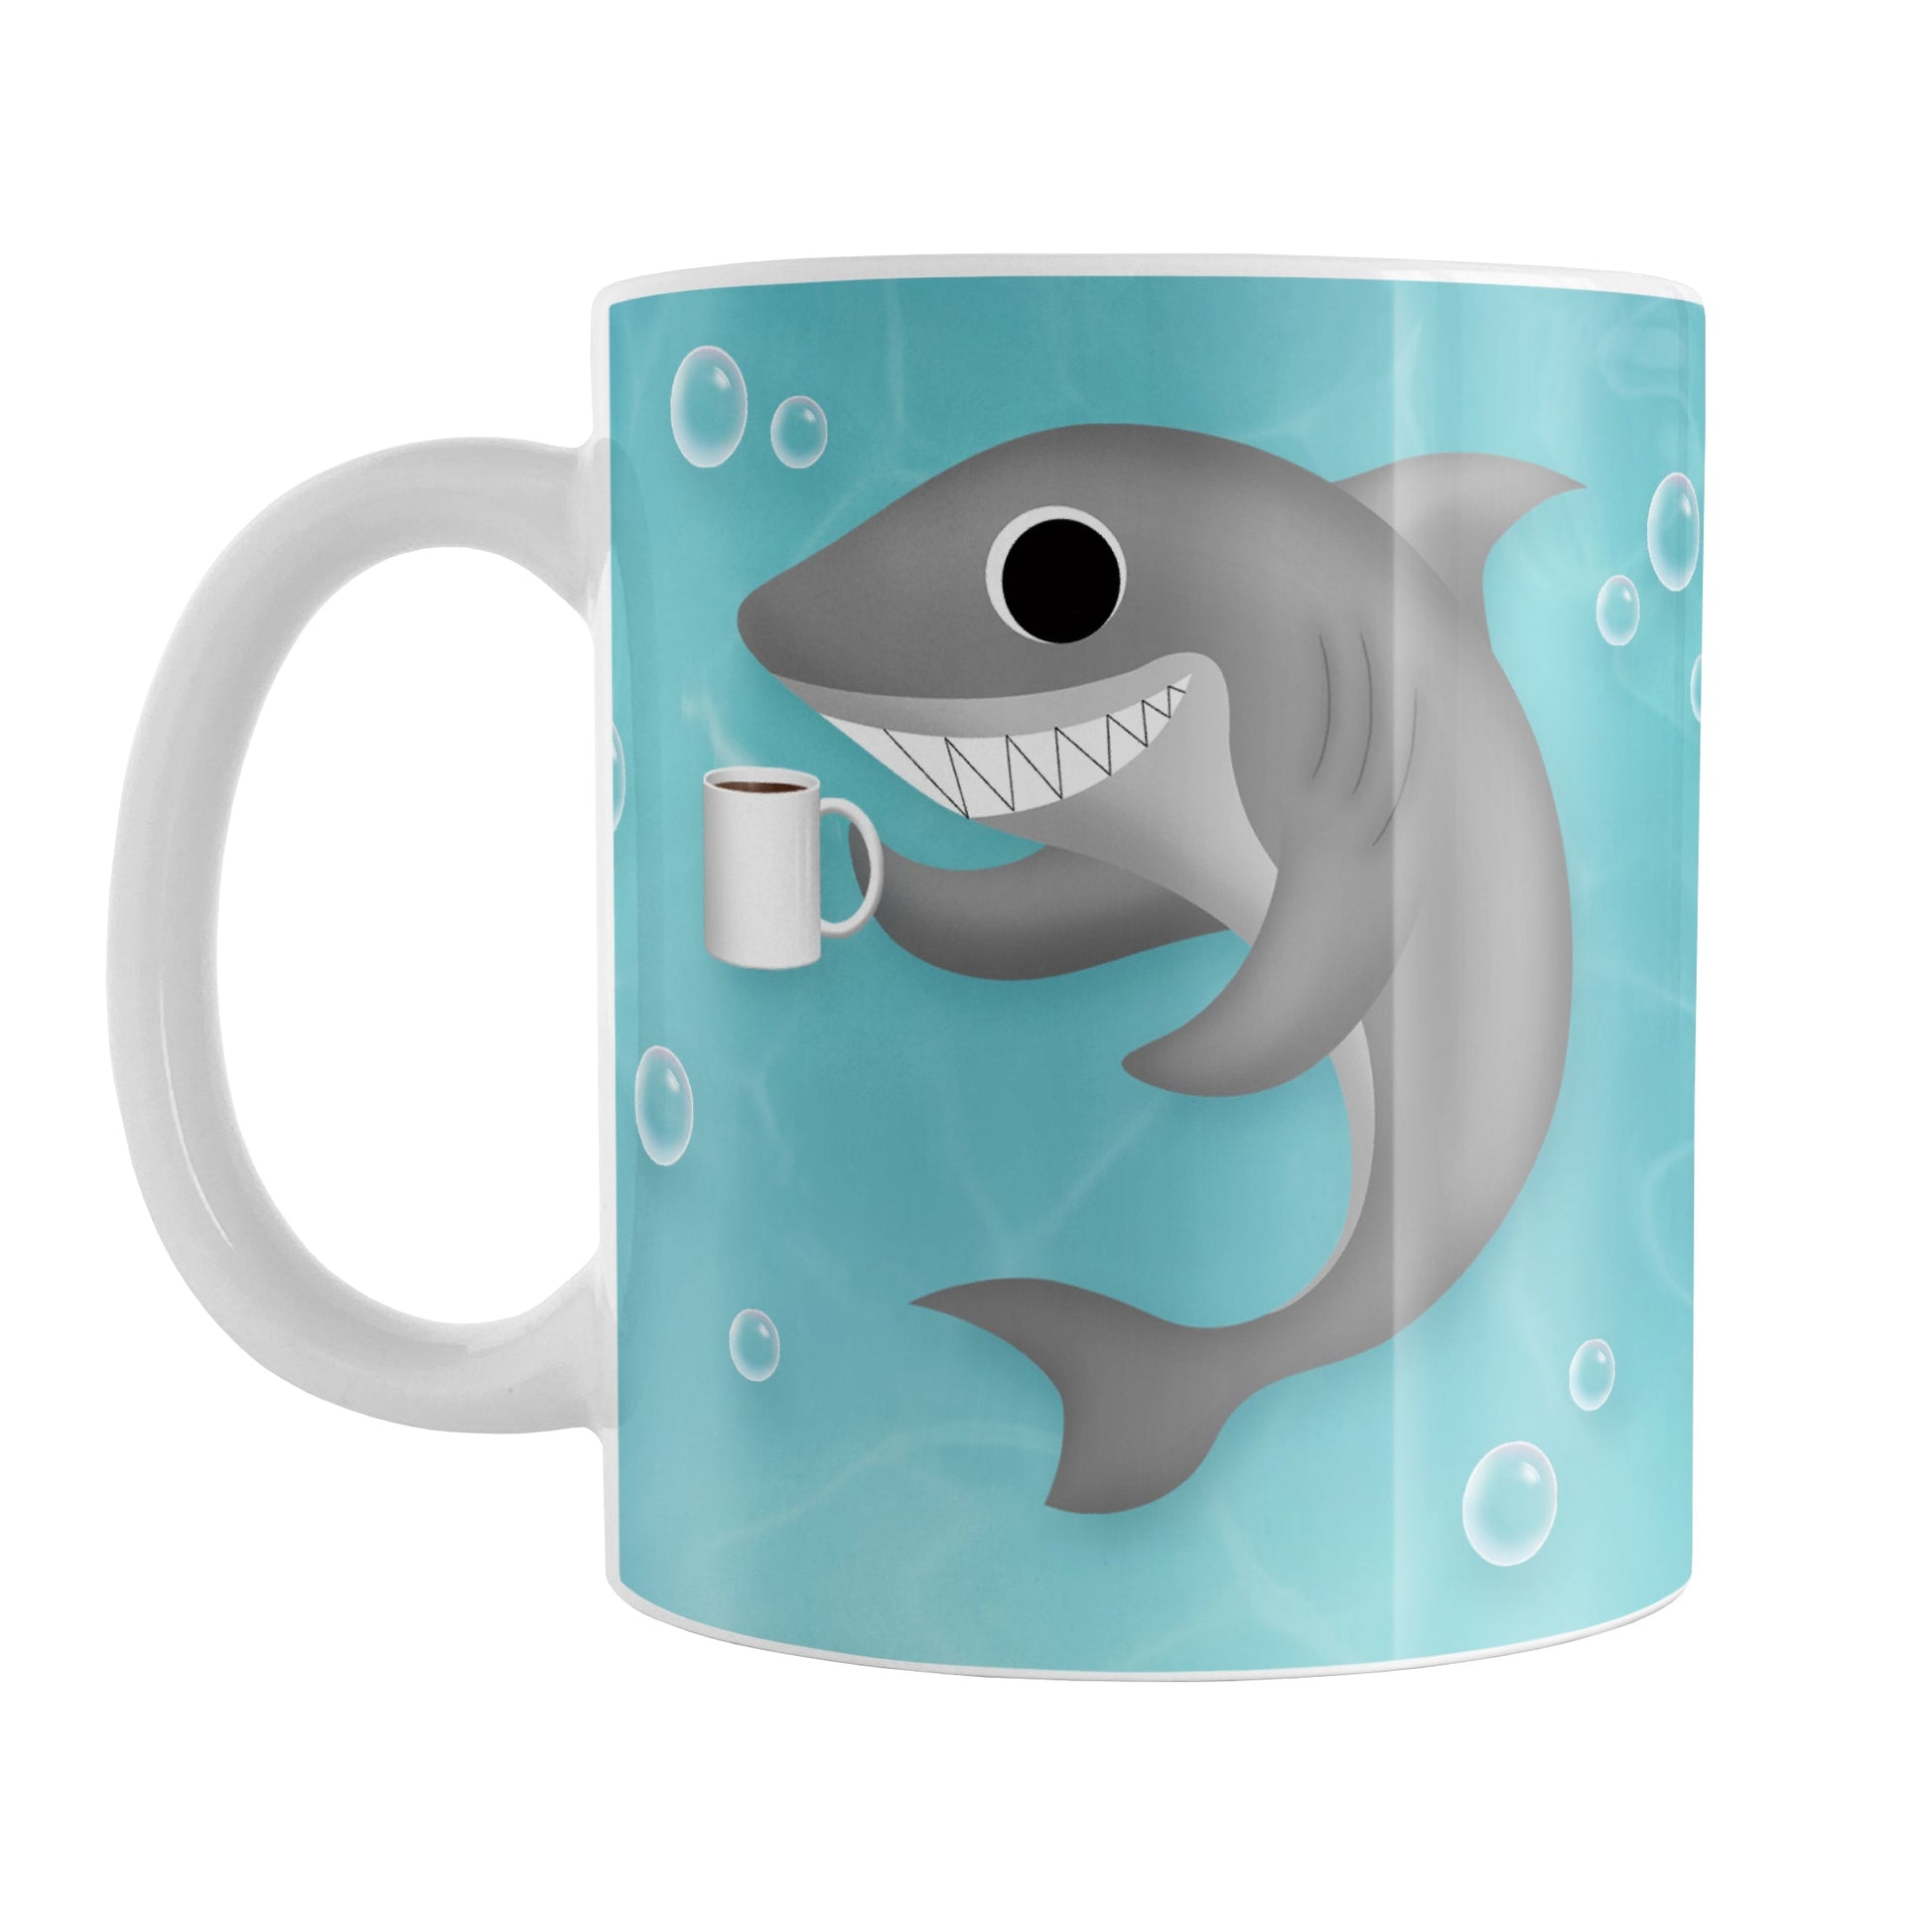 Cute Underwater Coffee Shark Mug (11oz) at Amy's Coffee Mugs